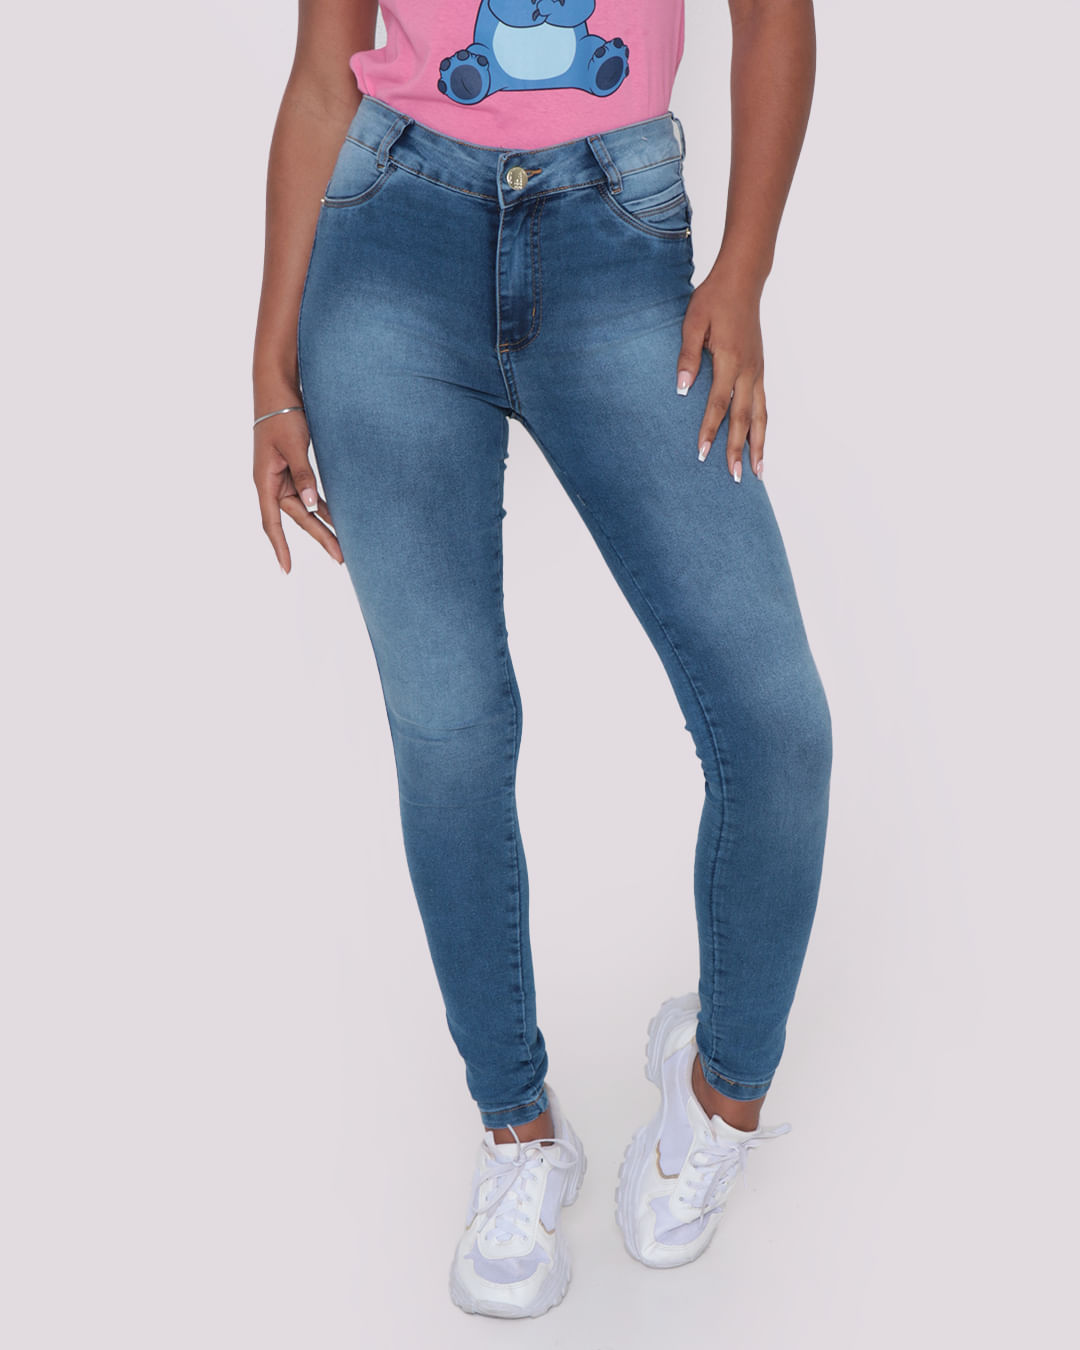 Calca-Jeans-Feminina-Skinny-Cintura-Alta-Azul-Claro